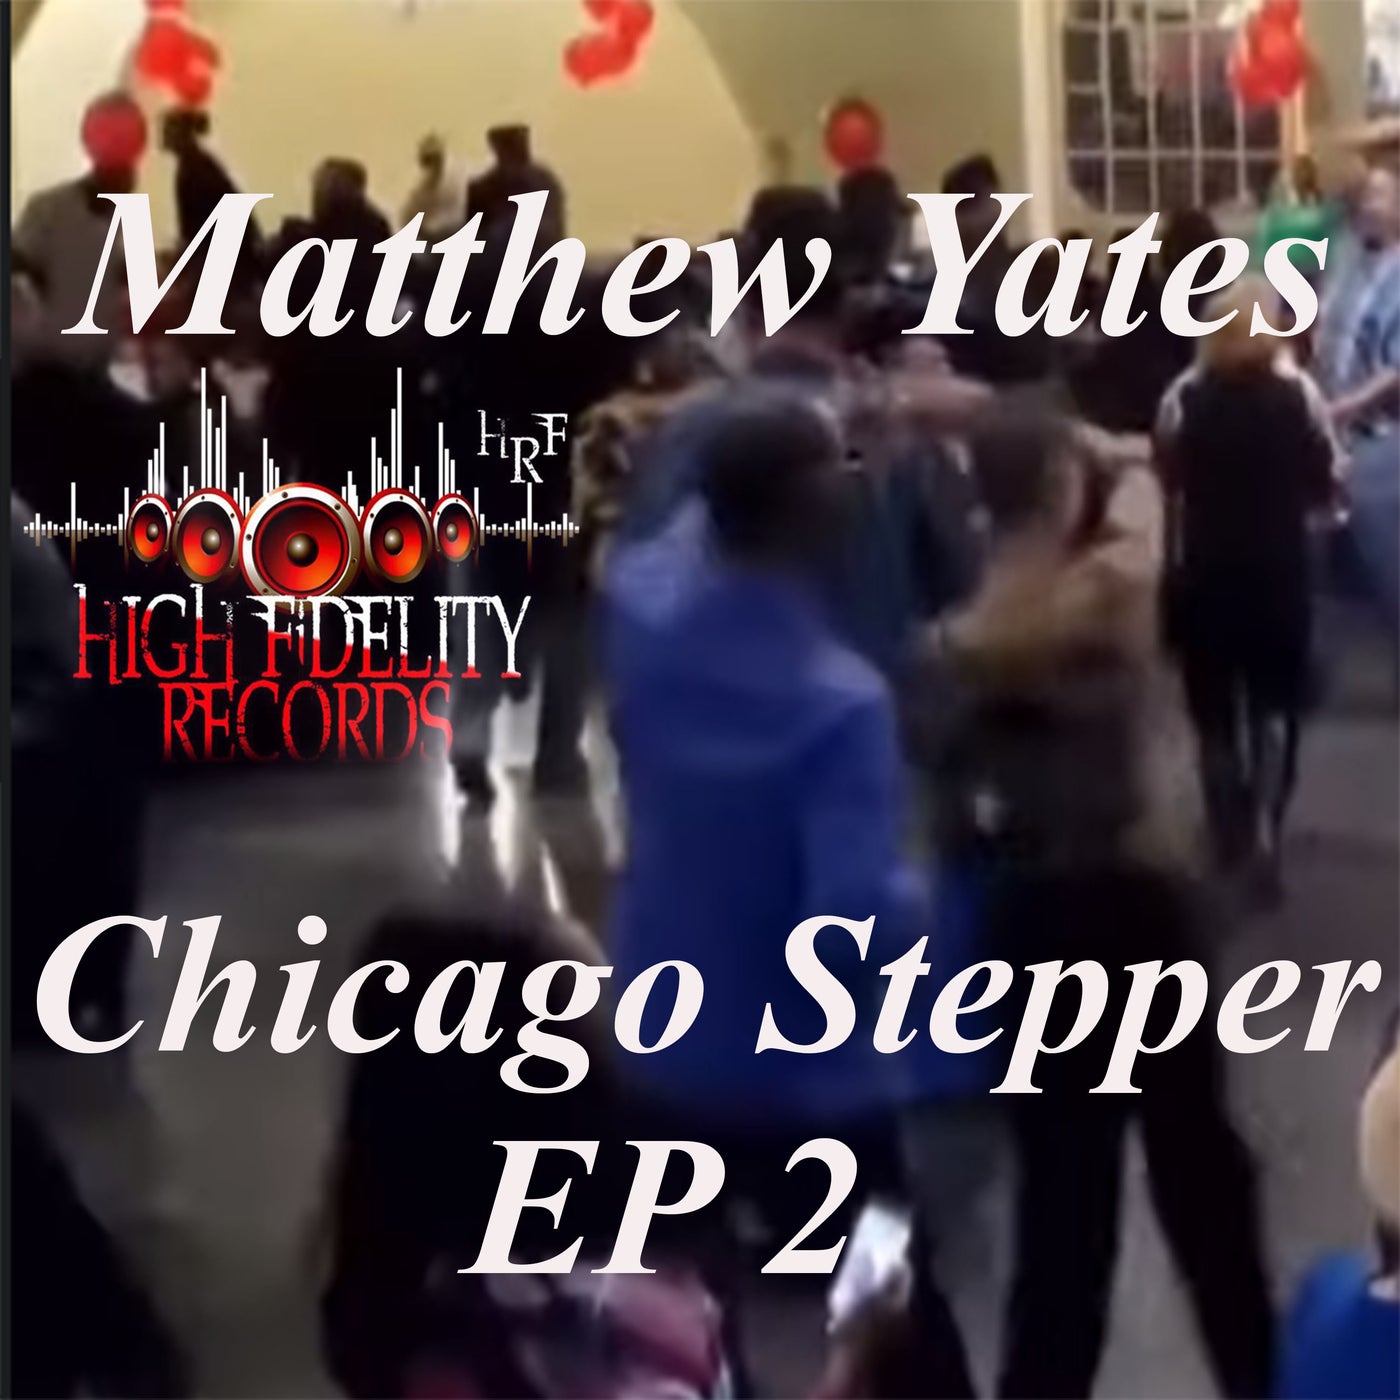 Chicago Stepper EP 2